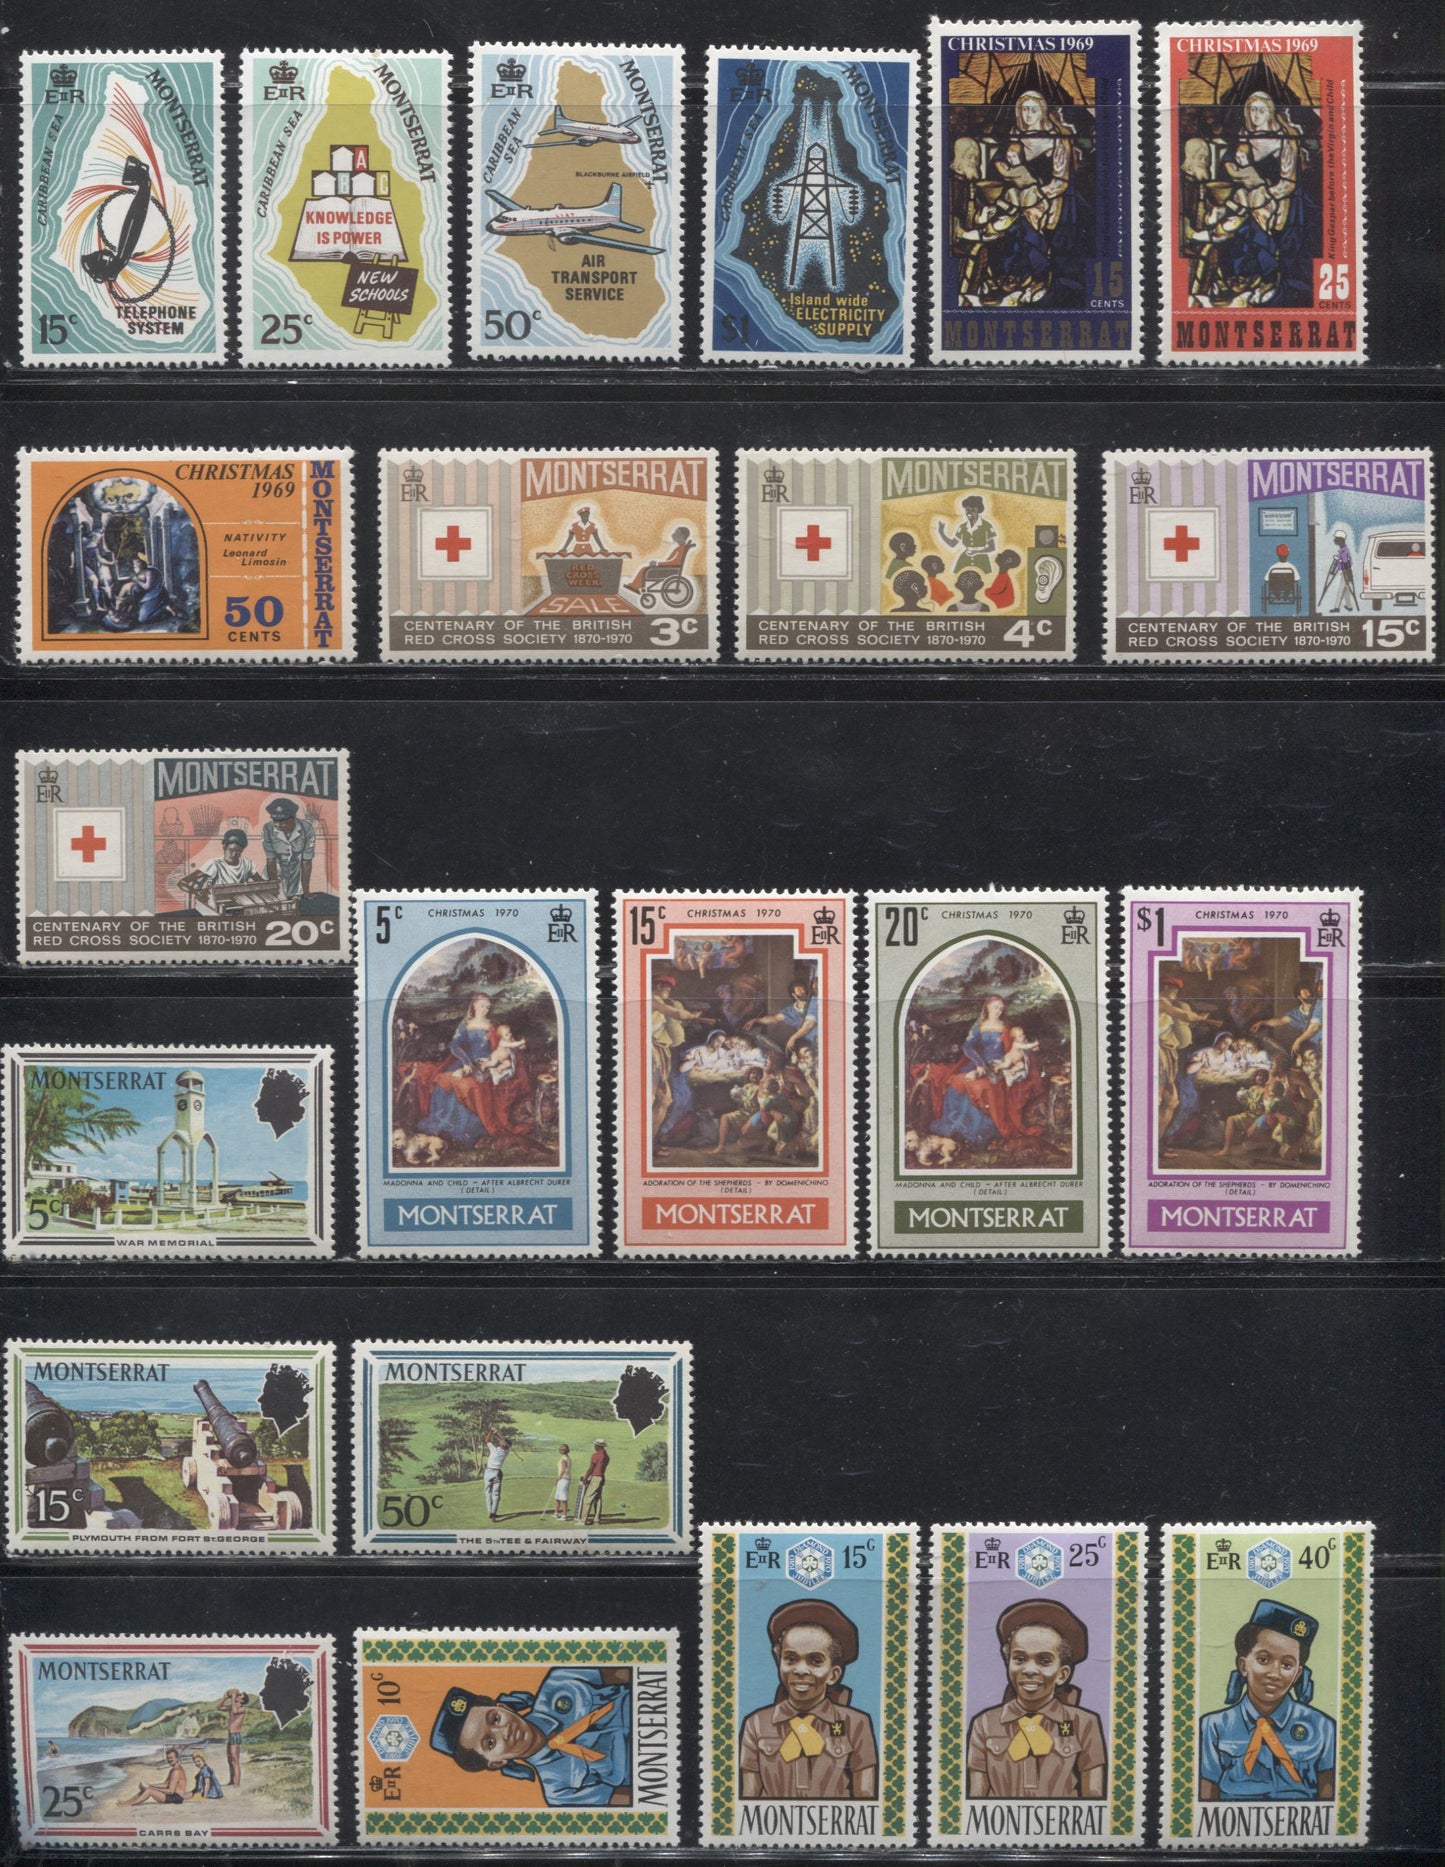 Lot 26 Montserrat SG #190/267 1968-1970 Group of 12 Sets and 1 Souvenir Sheet, Generally All VFNH